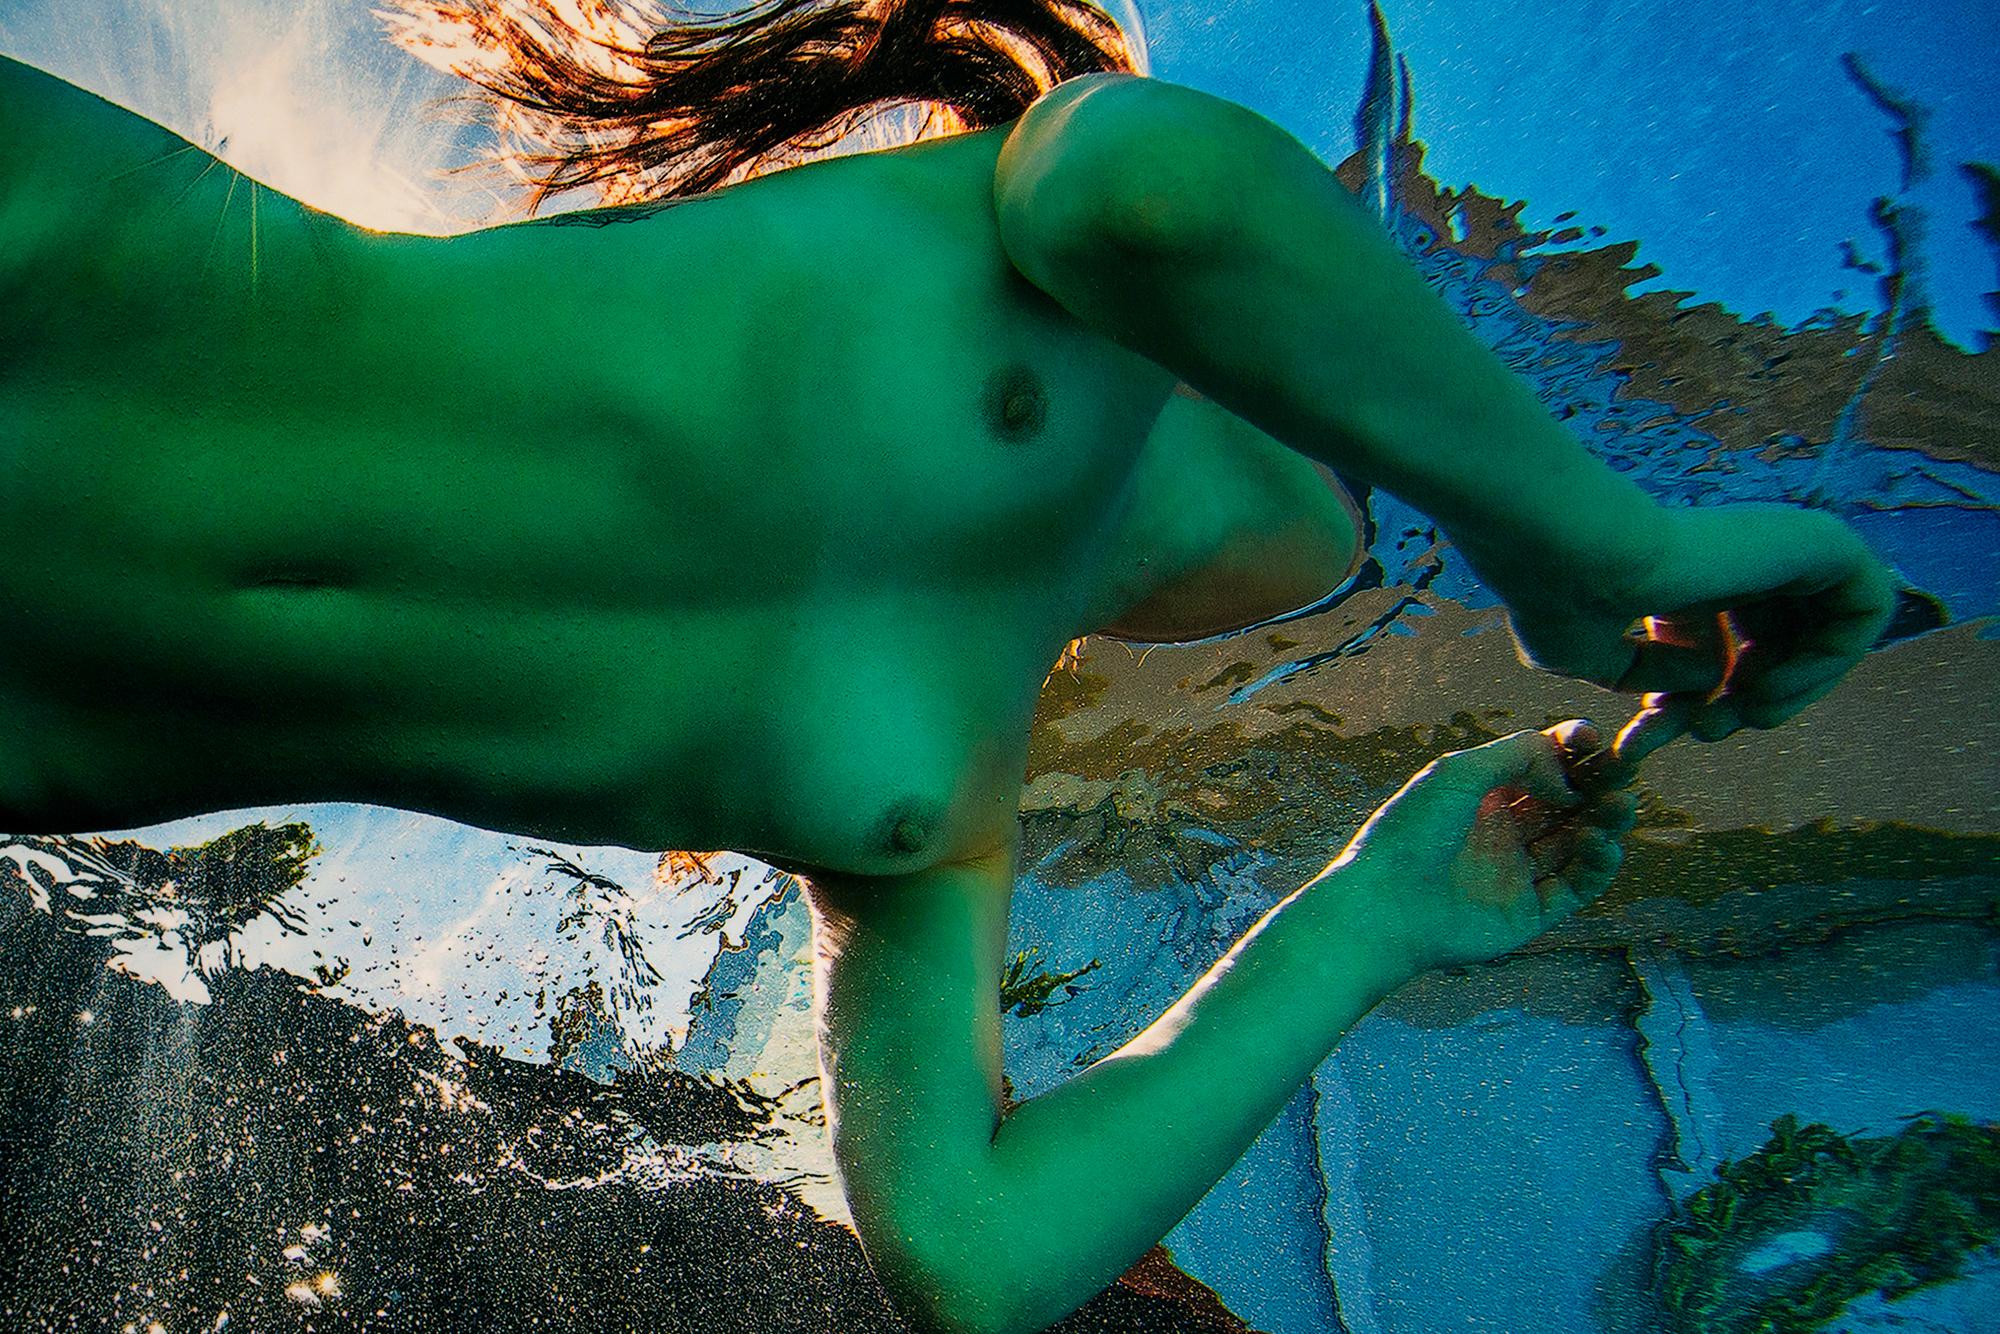 underwater nudity